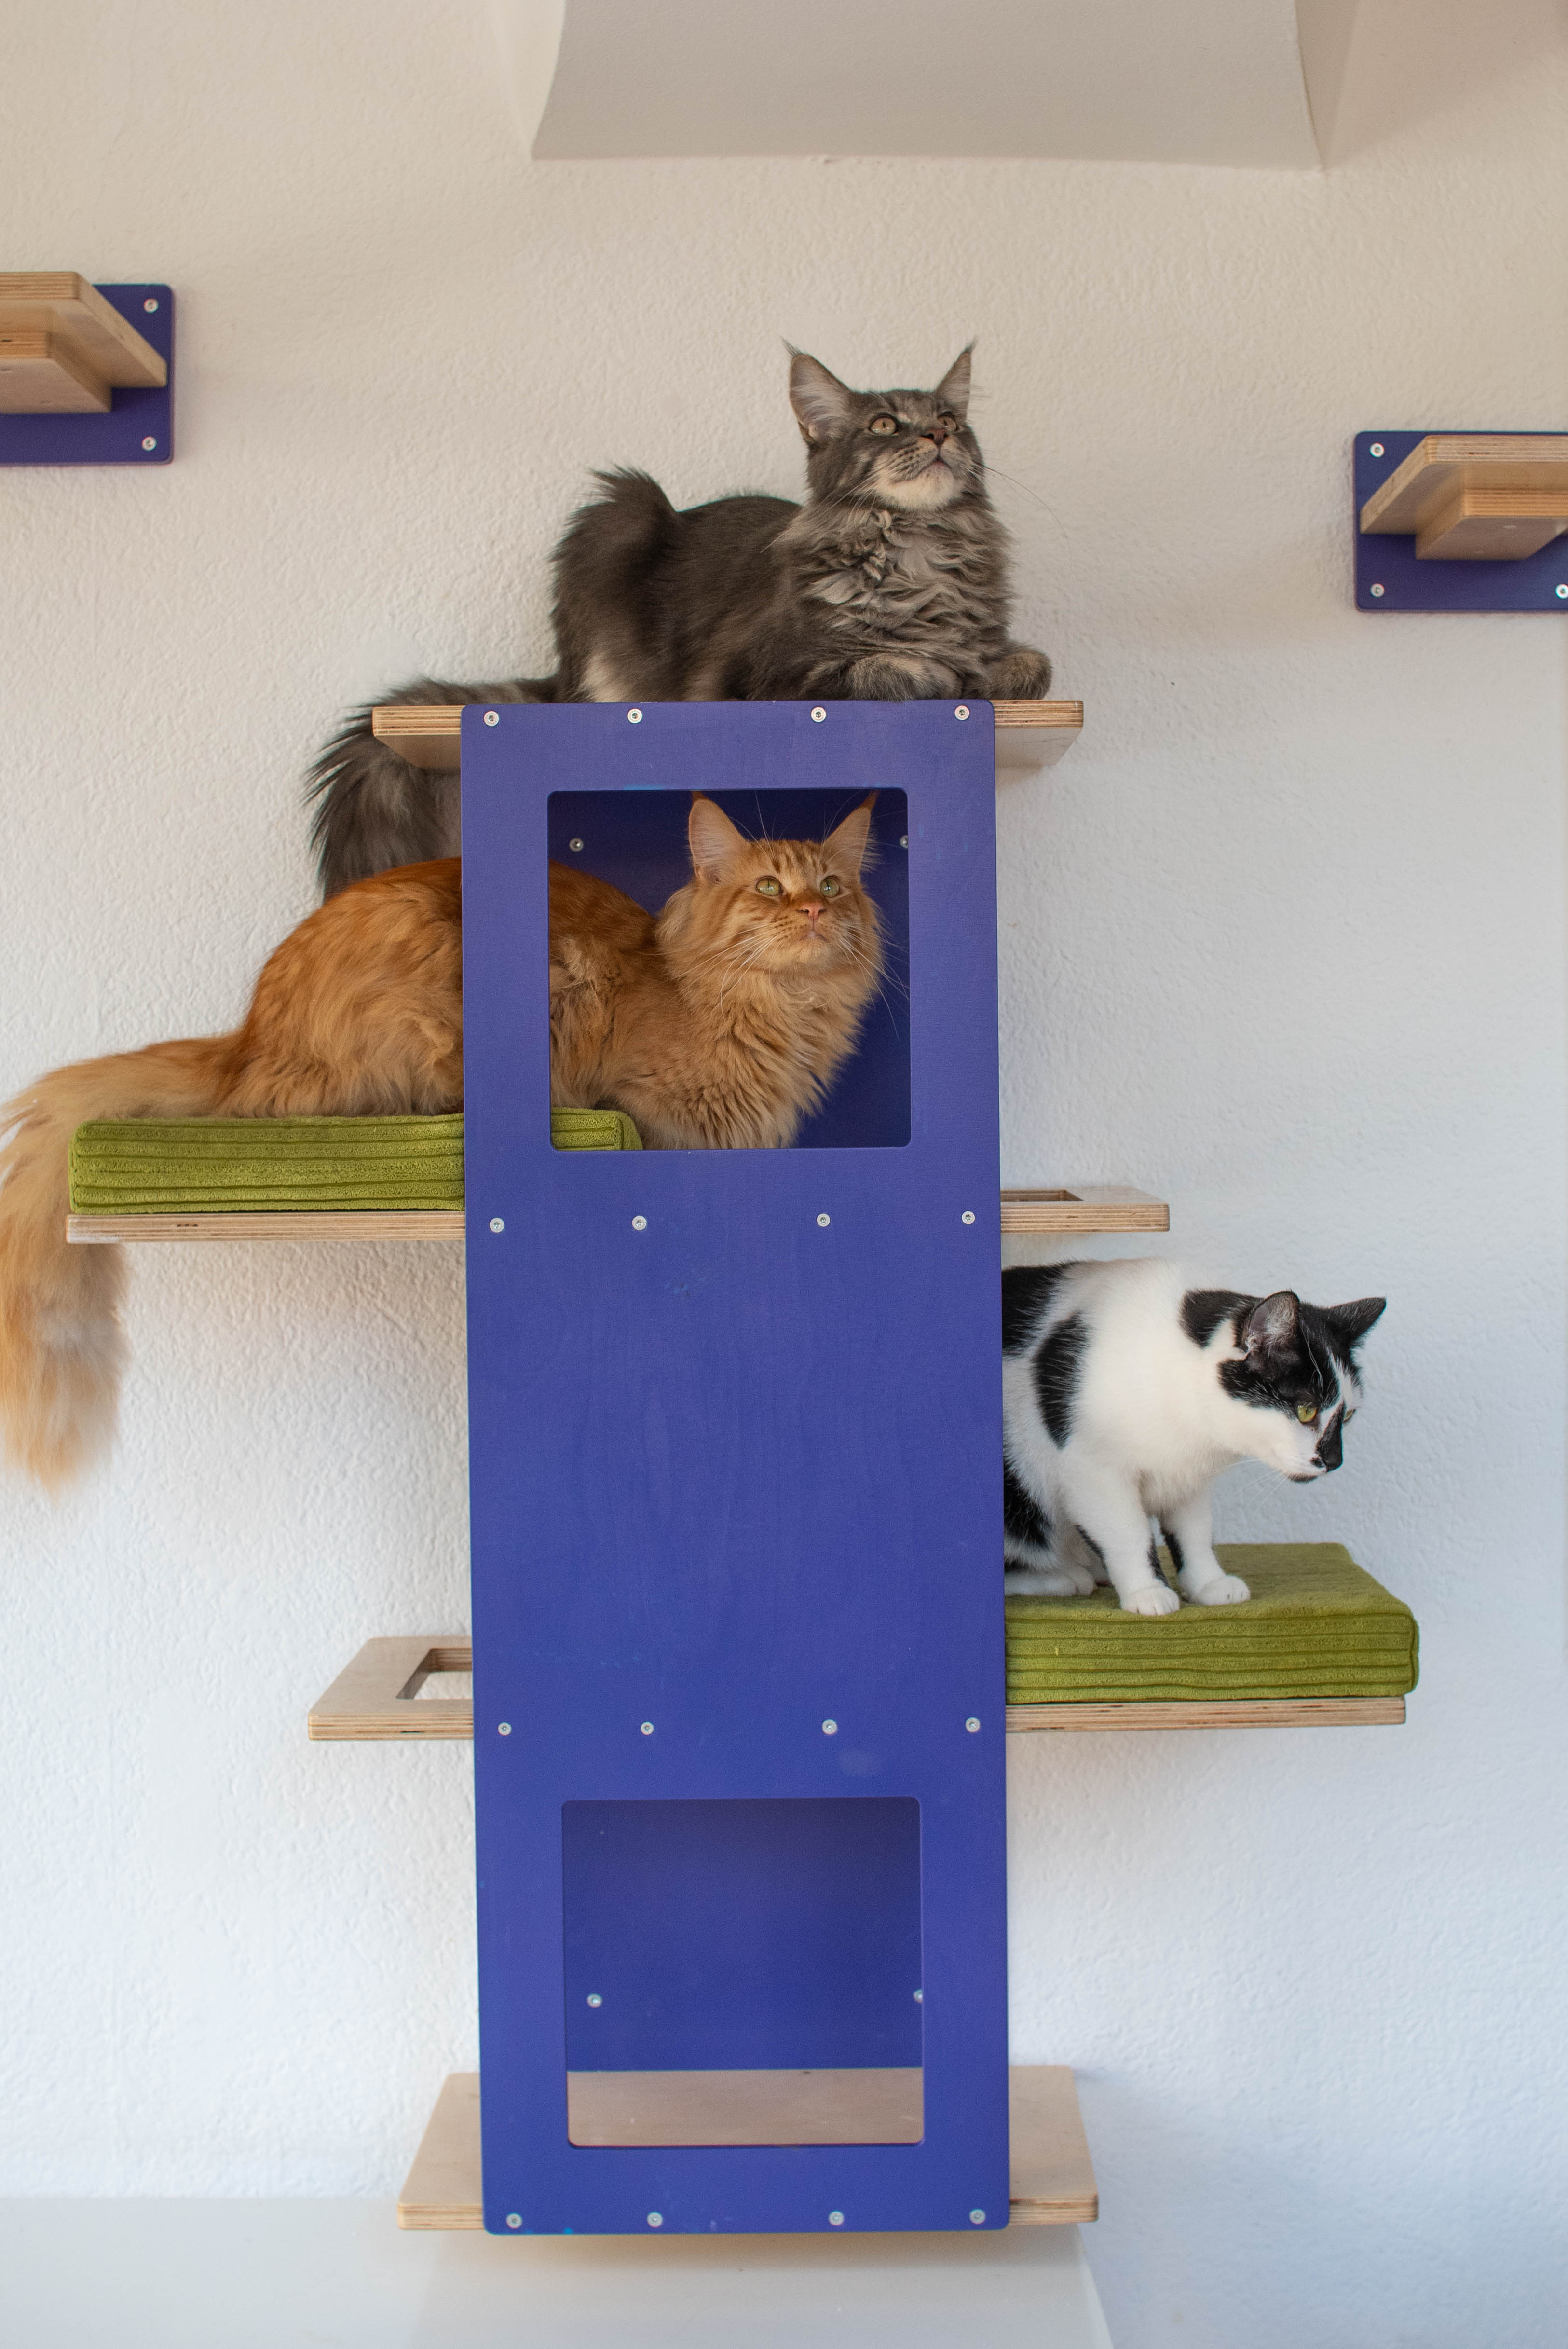 Big Cat Wall Shelf Bed - Wally BigCat Stacker - Scratchy Things Premium Pet Furniture